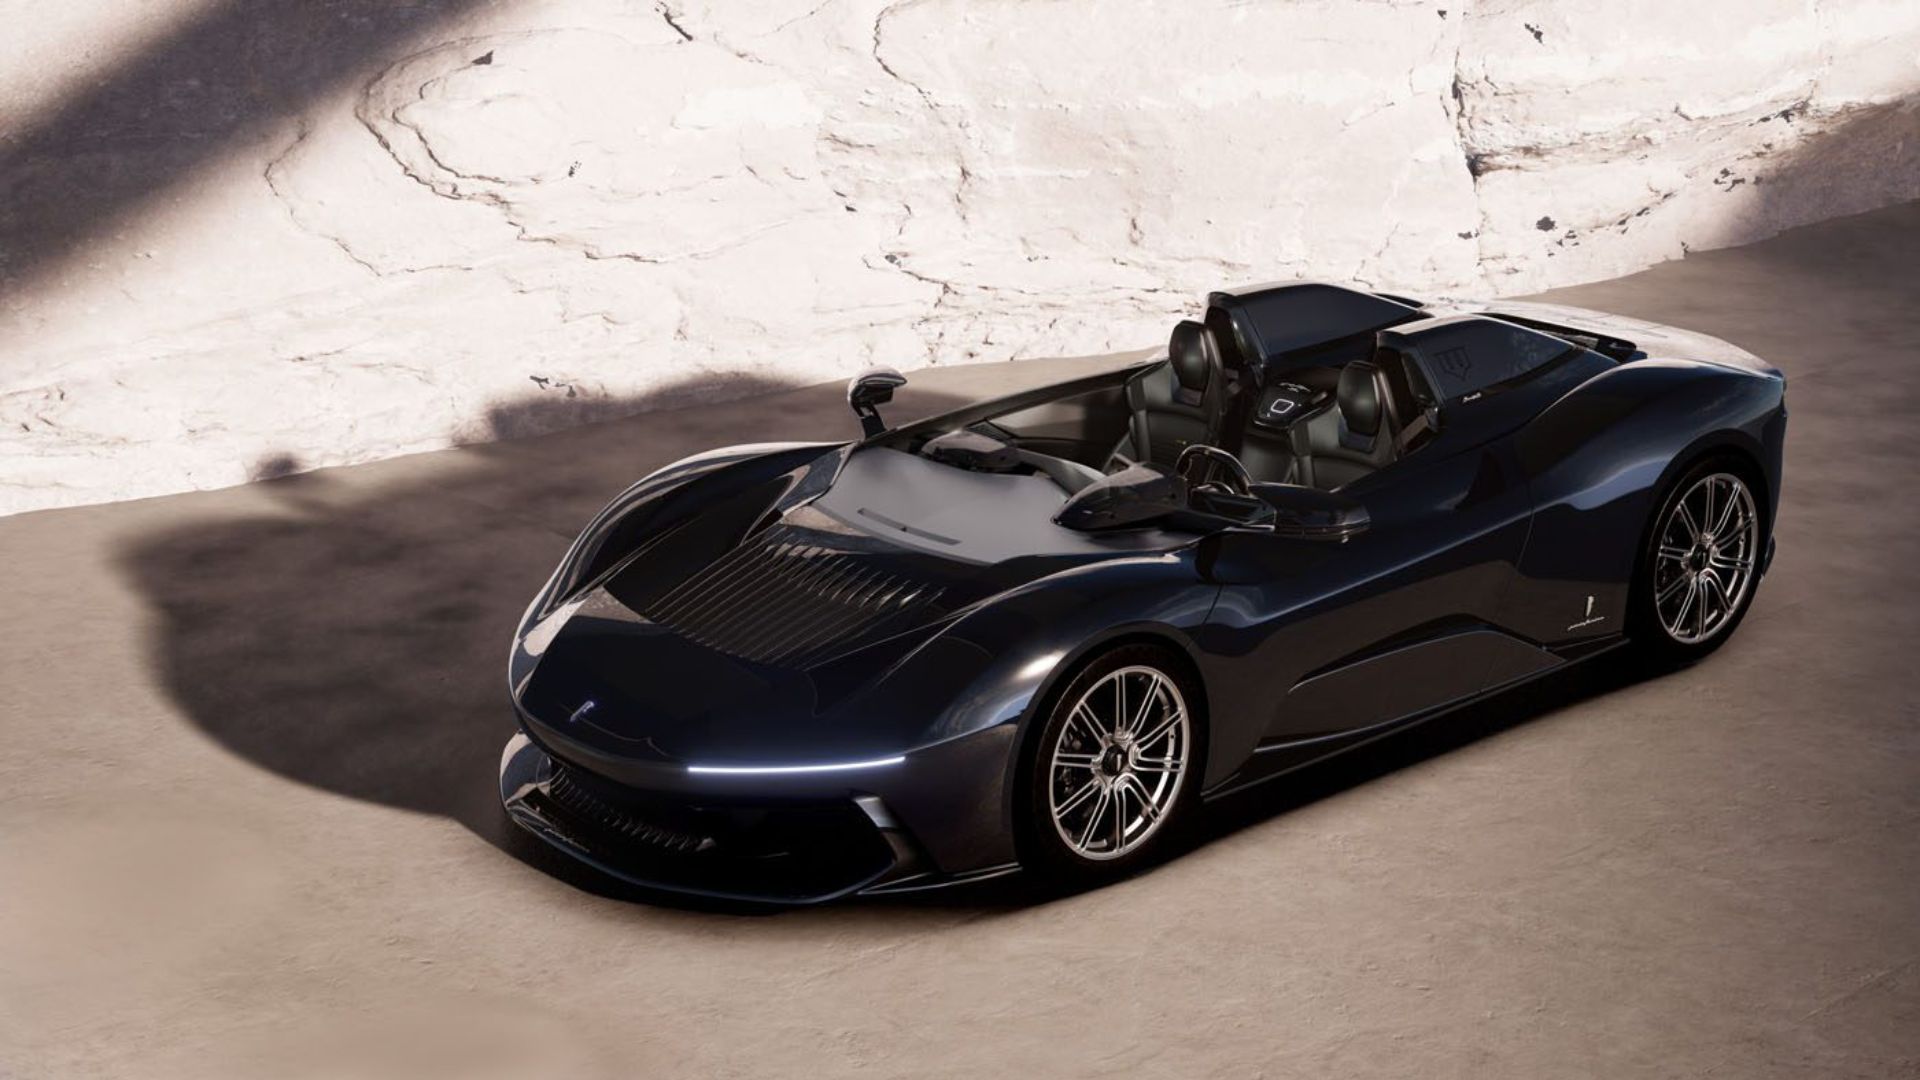 Automobili Pininfarina and DC Launch Batman-Inspired Hypercars